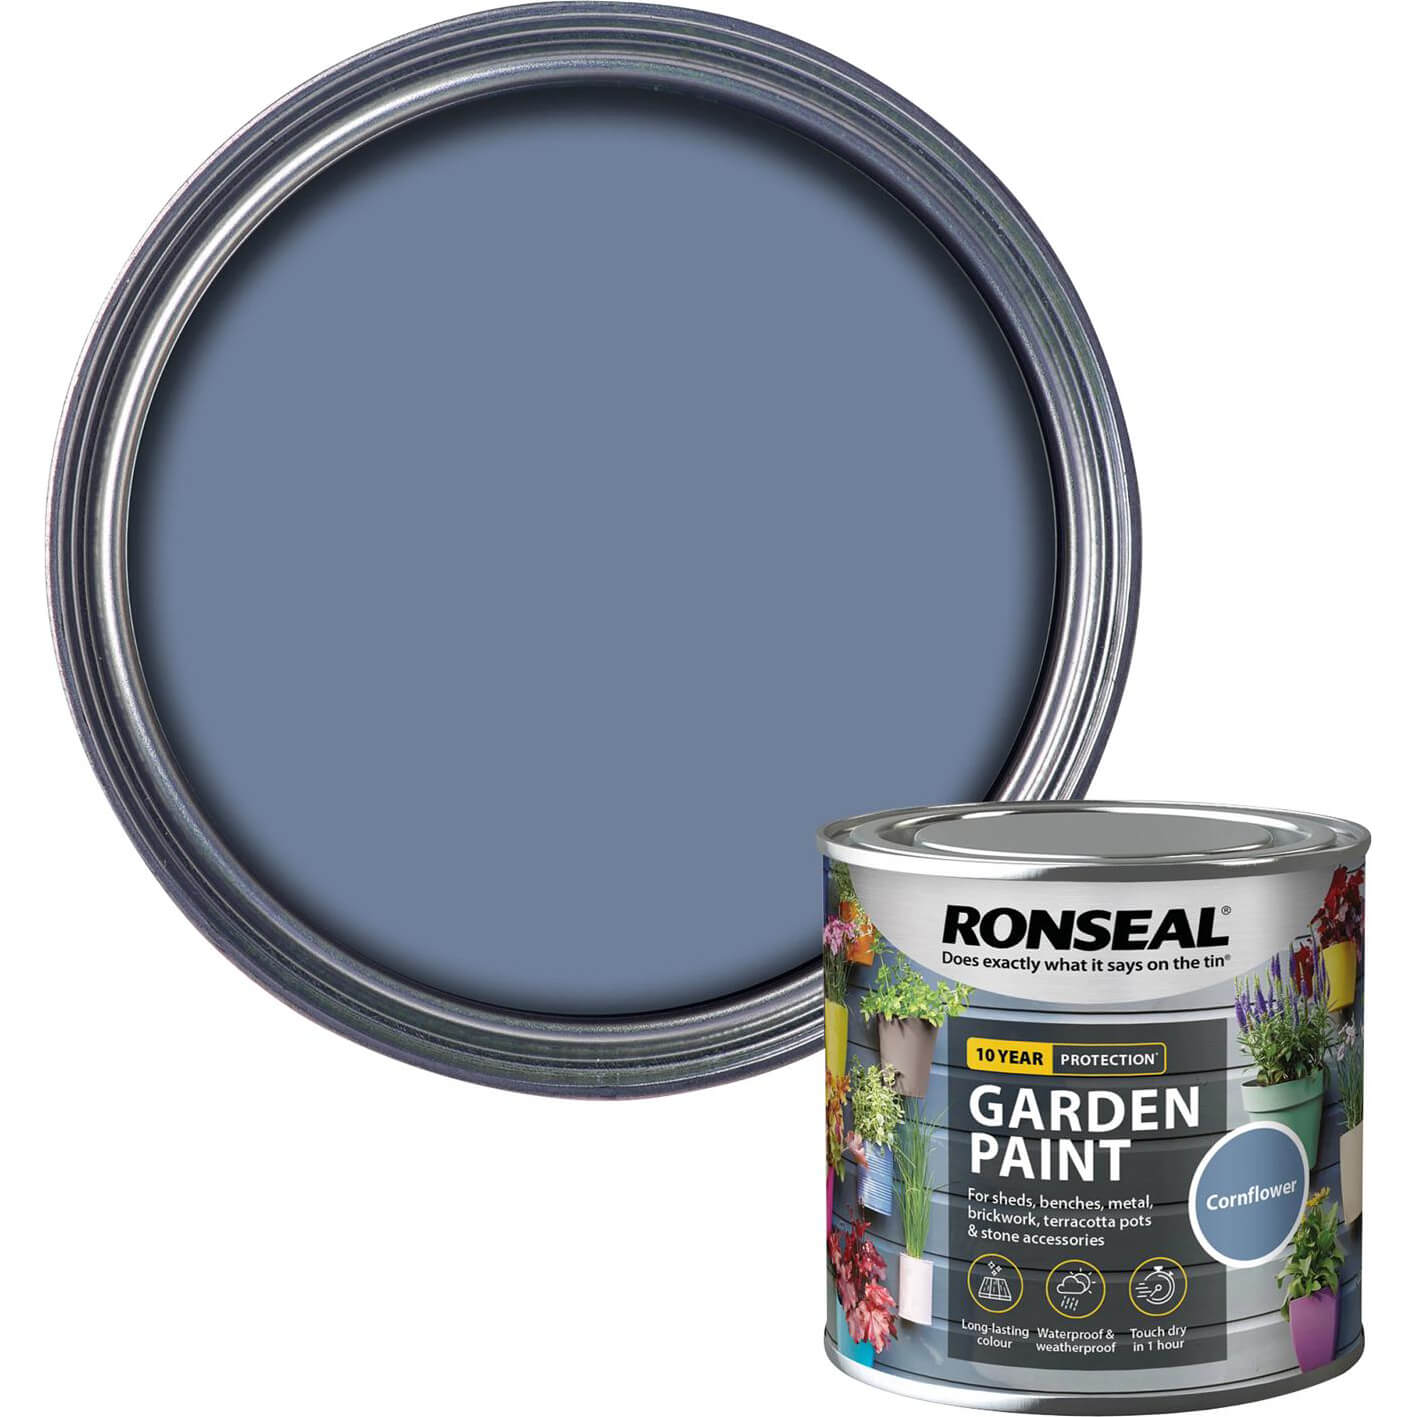 Image of Ronseal General Purpose Garden Paint Cornflower 250ml